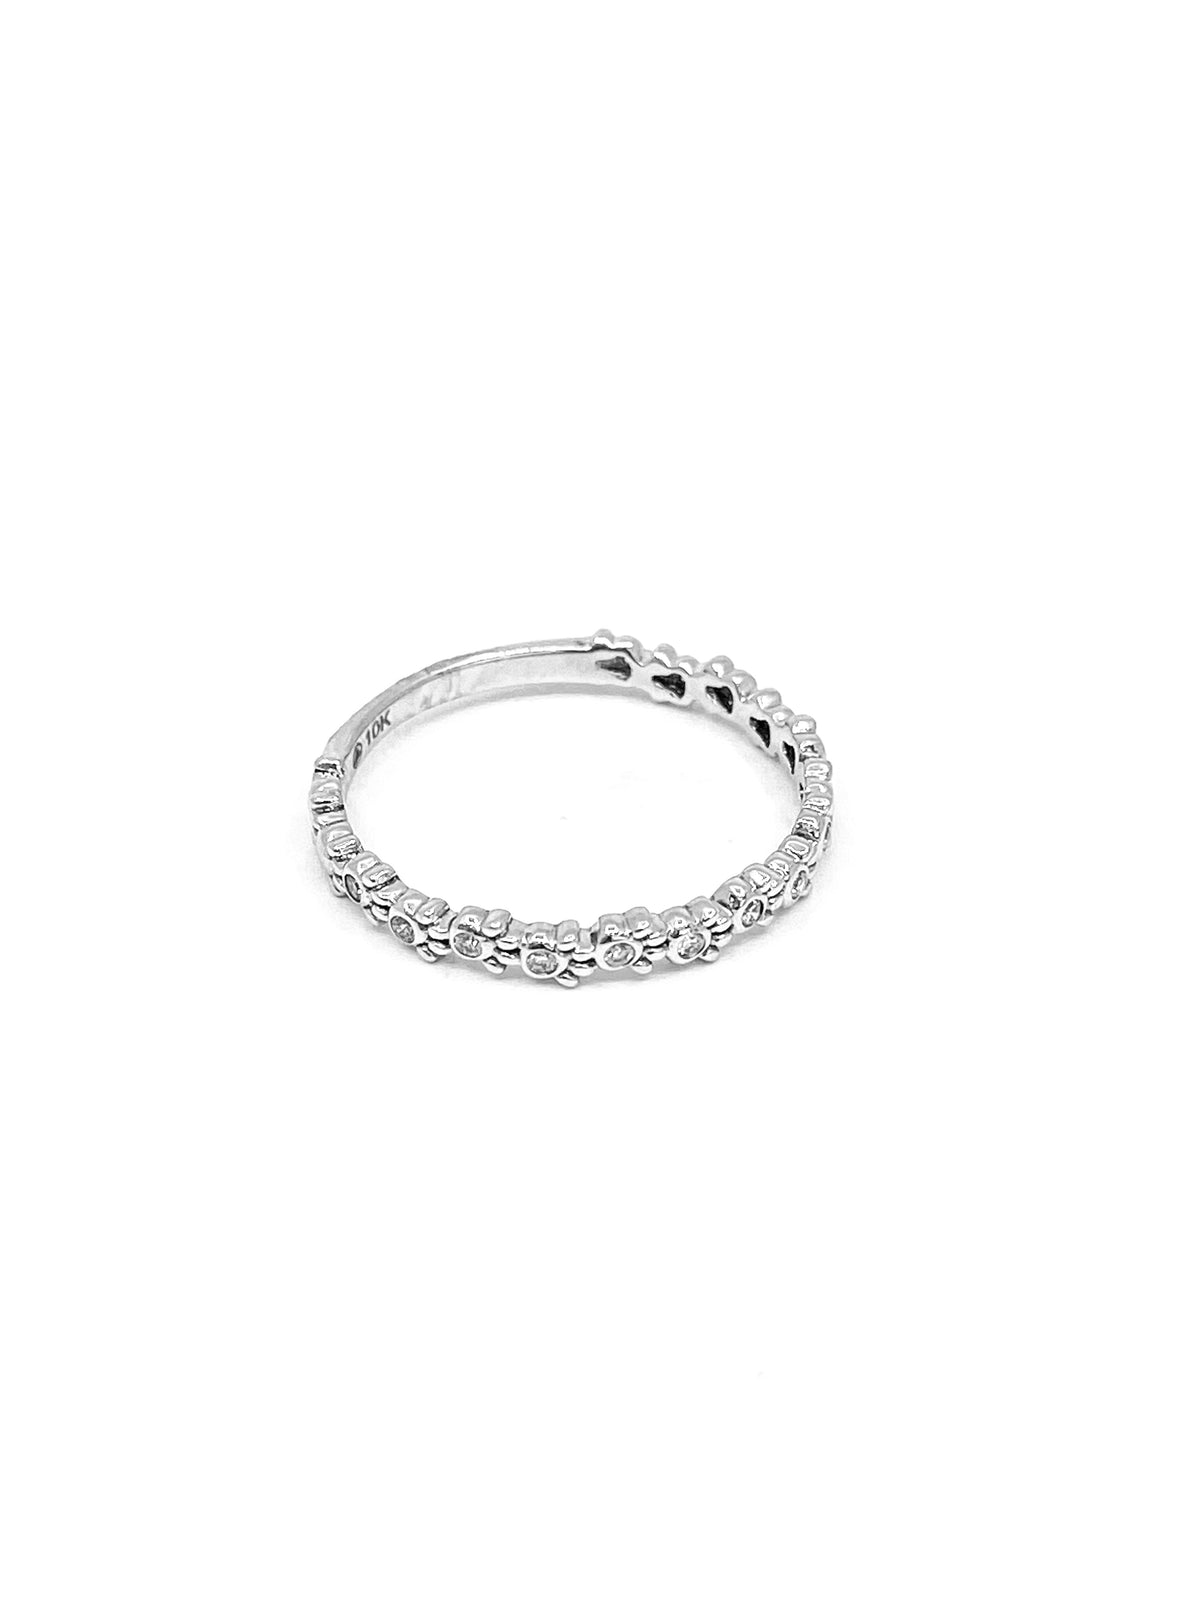 10K White Gold 0.065cttw Diamond Paw Print Ring, size 6.5